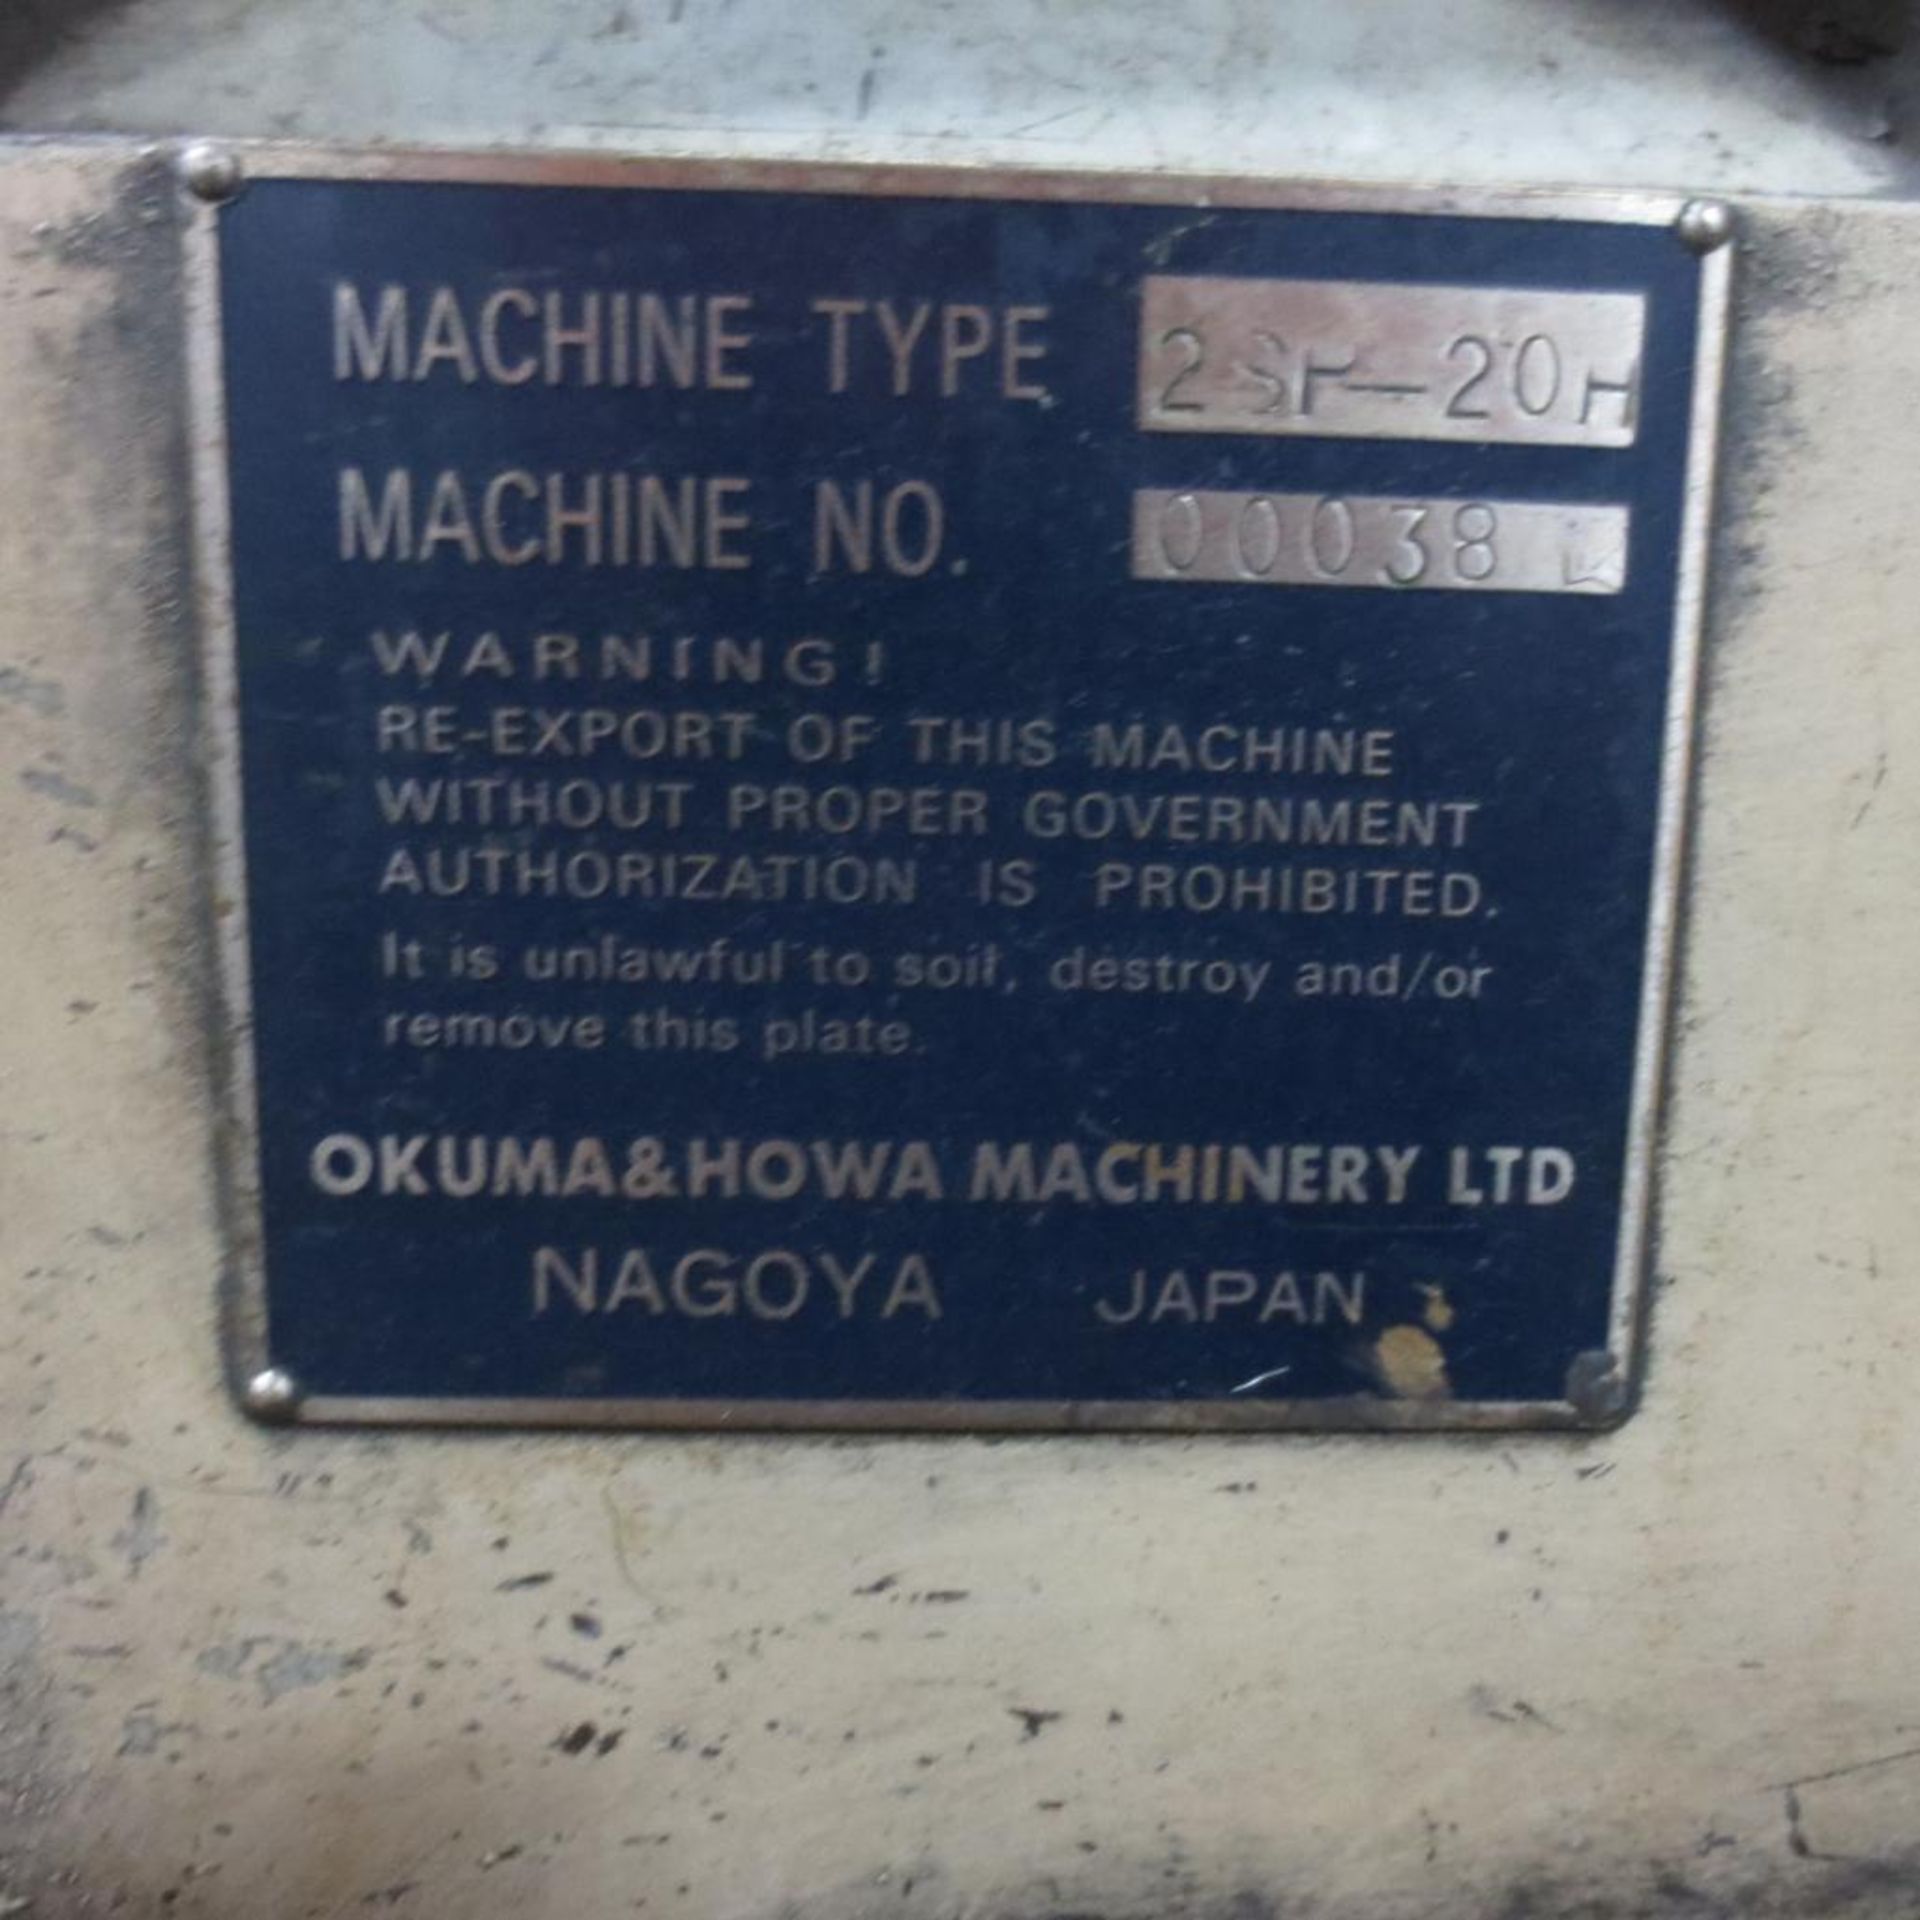 Okuma & Howa Model 2SP-20H Twin Spindle CNC Turning Center, S/N 00038, Fanuc Series 18-TT CNC Contro - Image 2 of 10